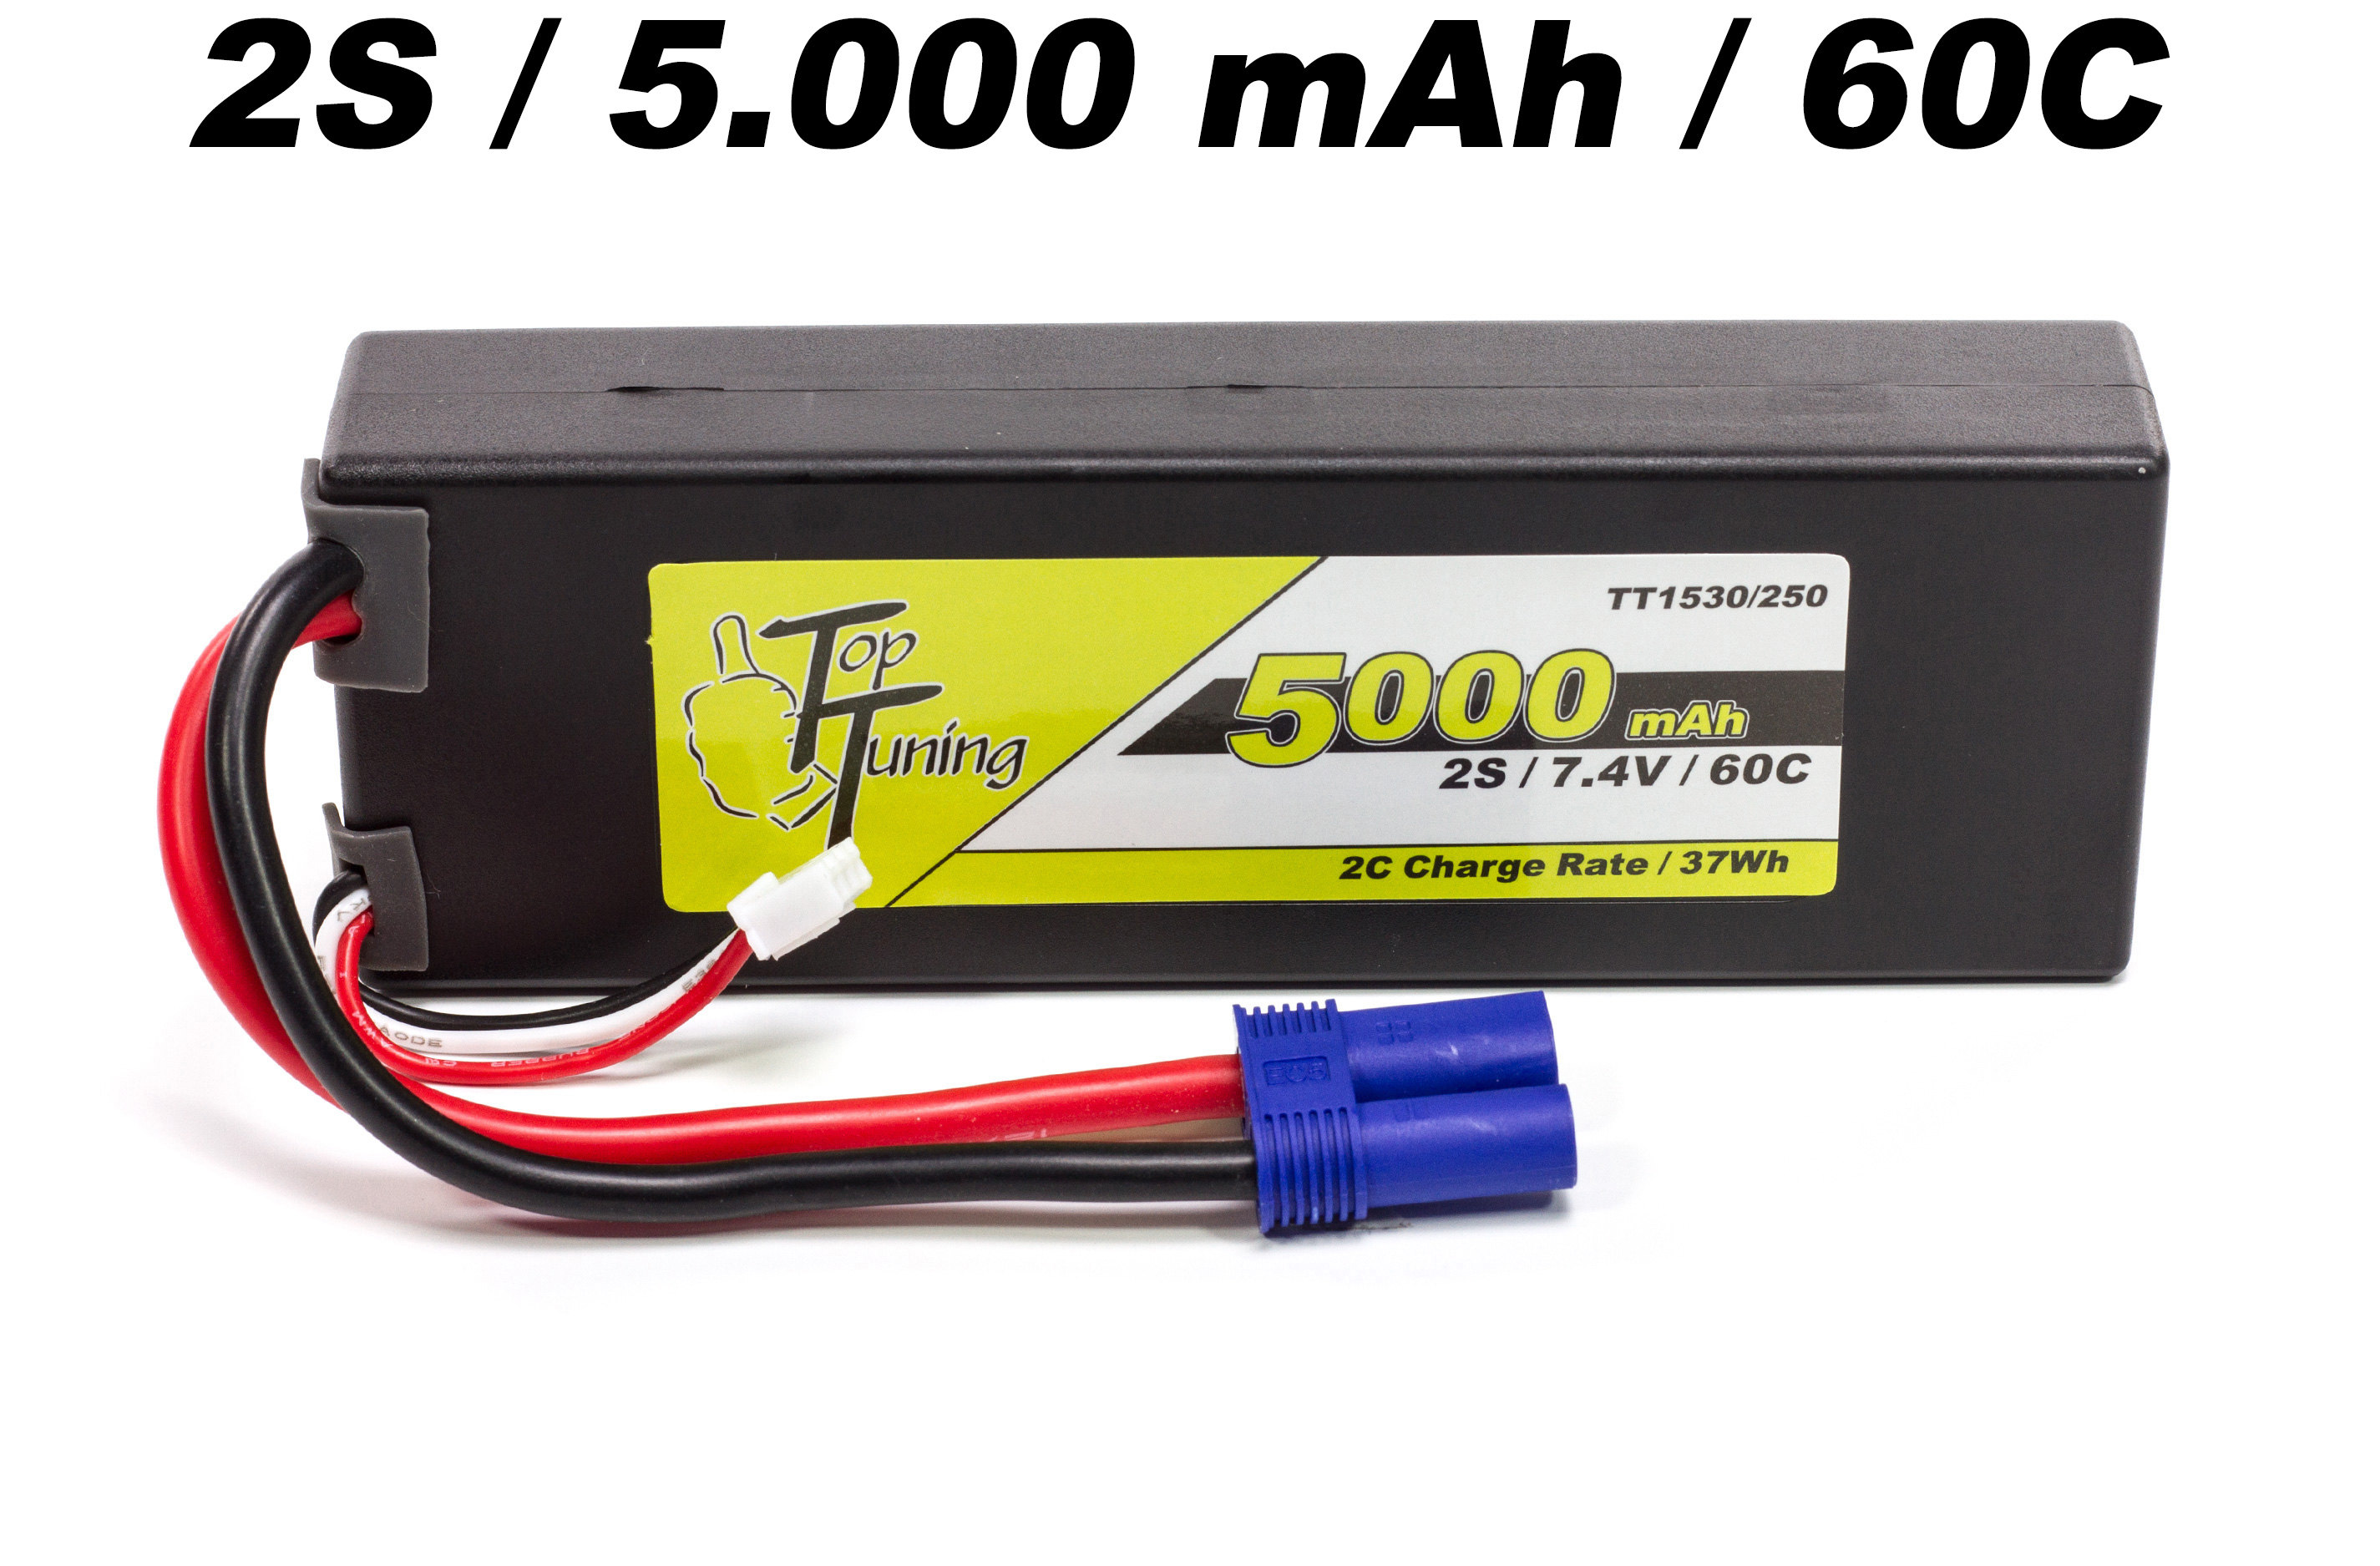 TT1530/250 Top Tuning 5000 mAh LiPo battery 2S, 7,4V 60C Offer